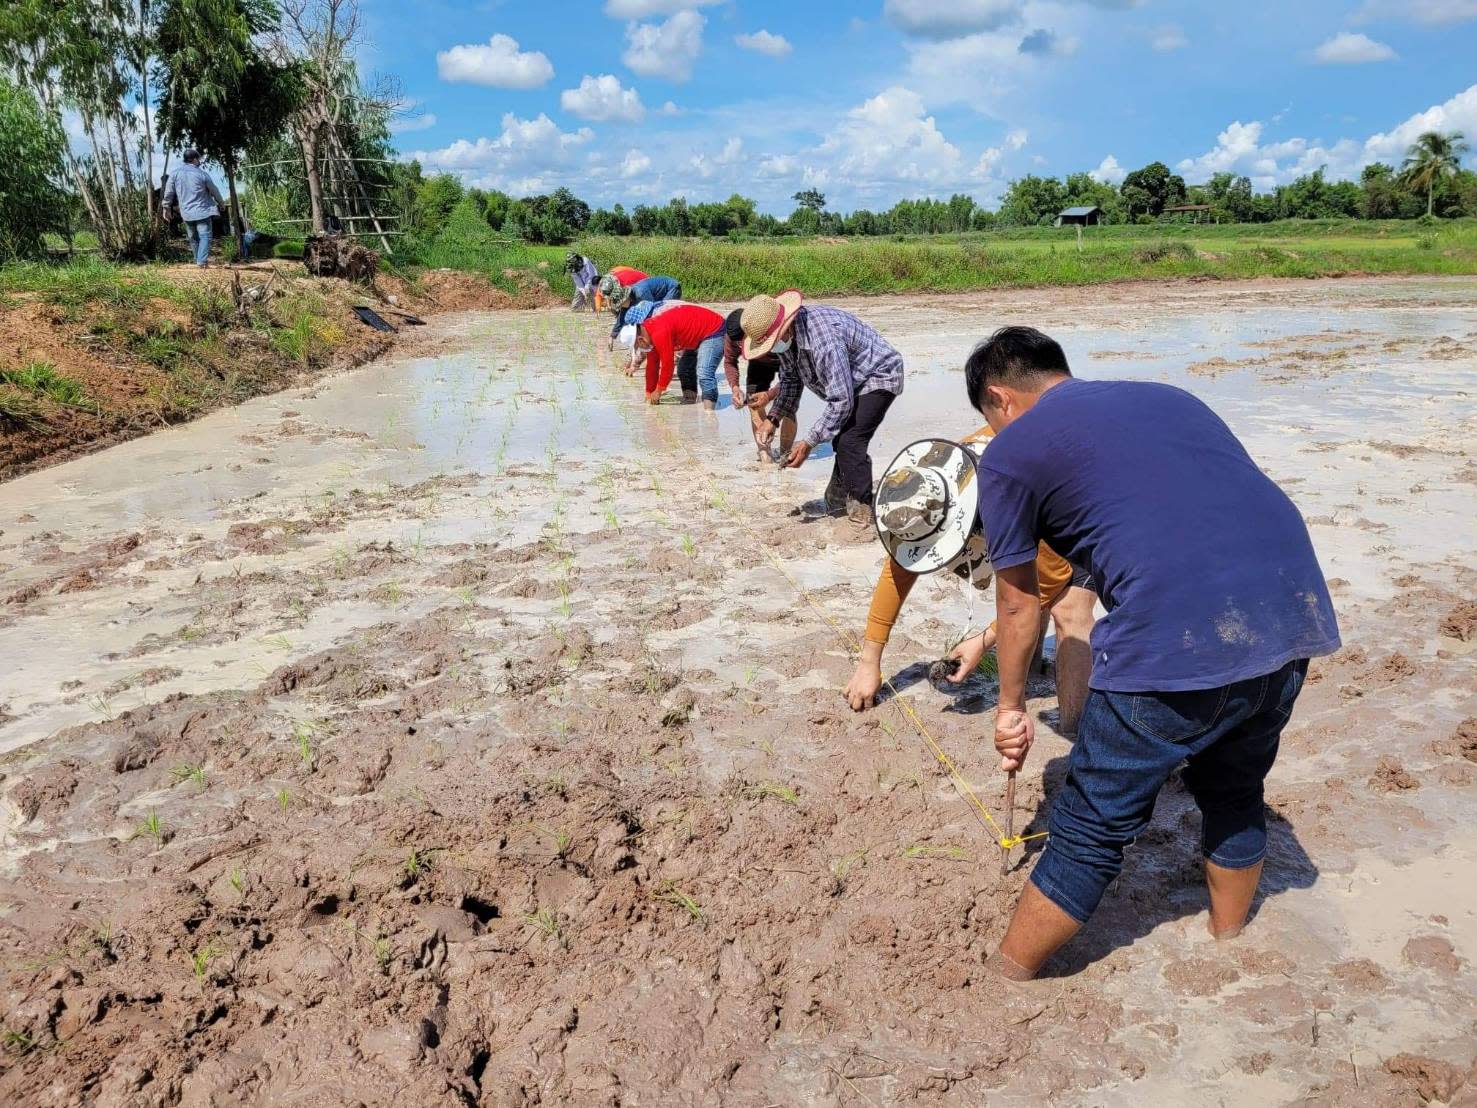 Thai rice farmers planting a rice paddy.